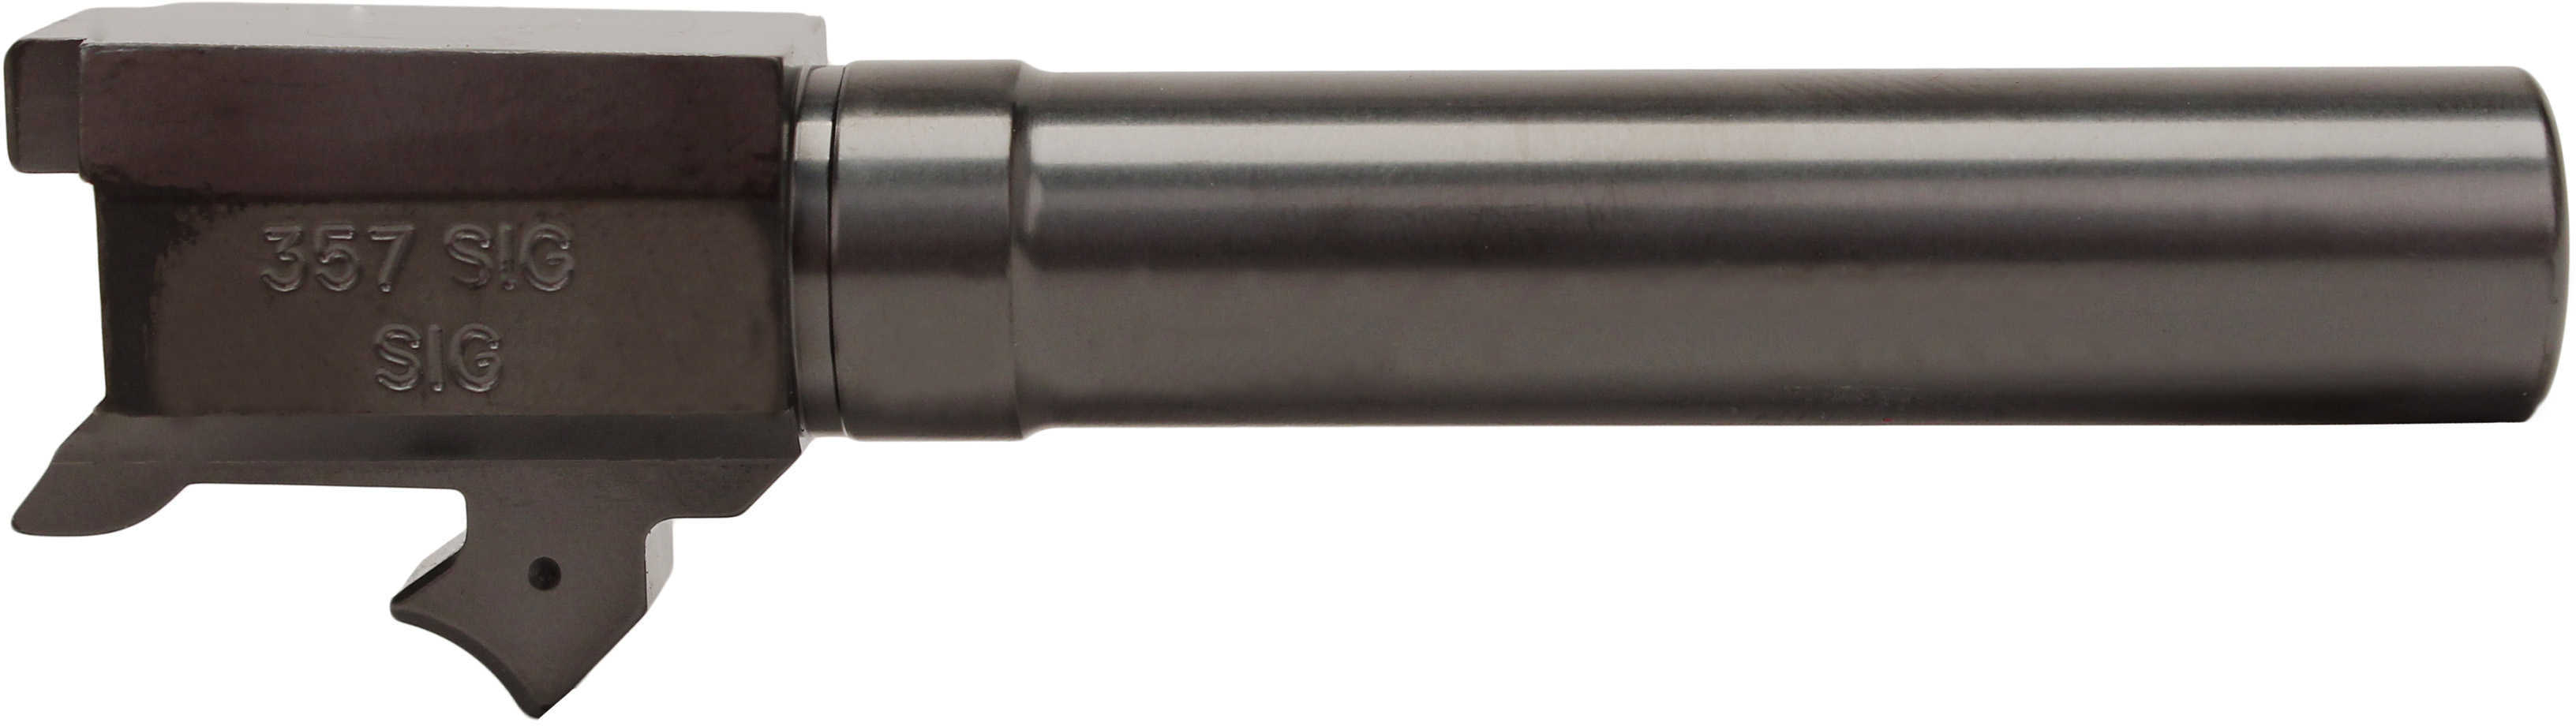 Sig Sauer Conversion Barrel For P229 357 3.9"-img-1